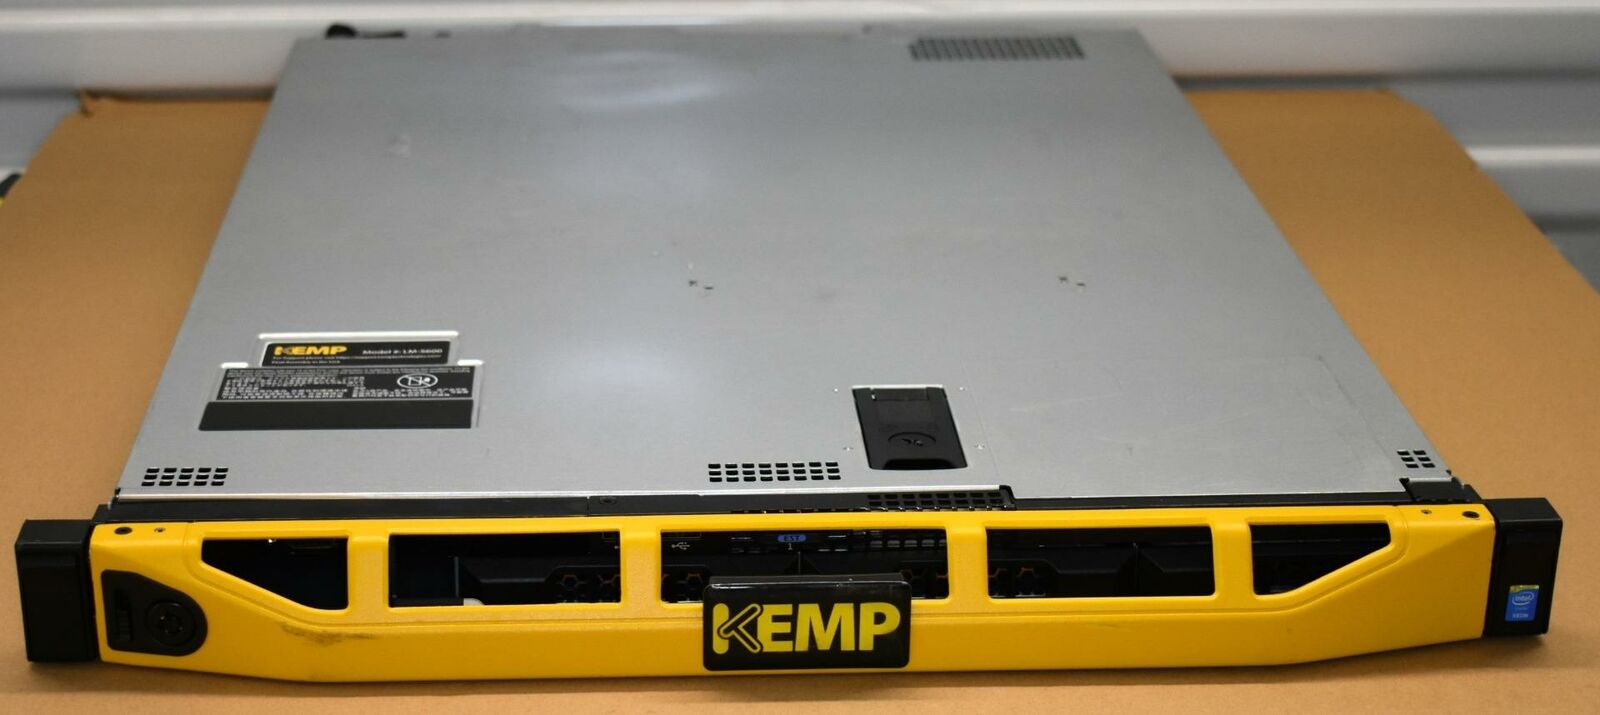 Kemp LM-5600 Dell PowerEdge R430 2X E5-2640 v3 2.60GHz 16GB Broadcom  2x 10GBe